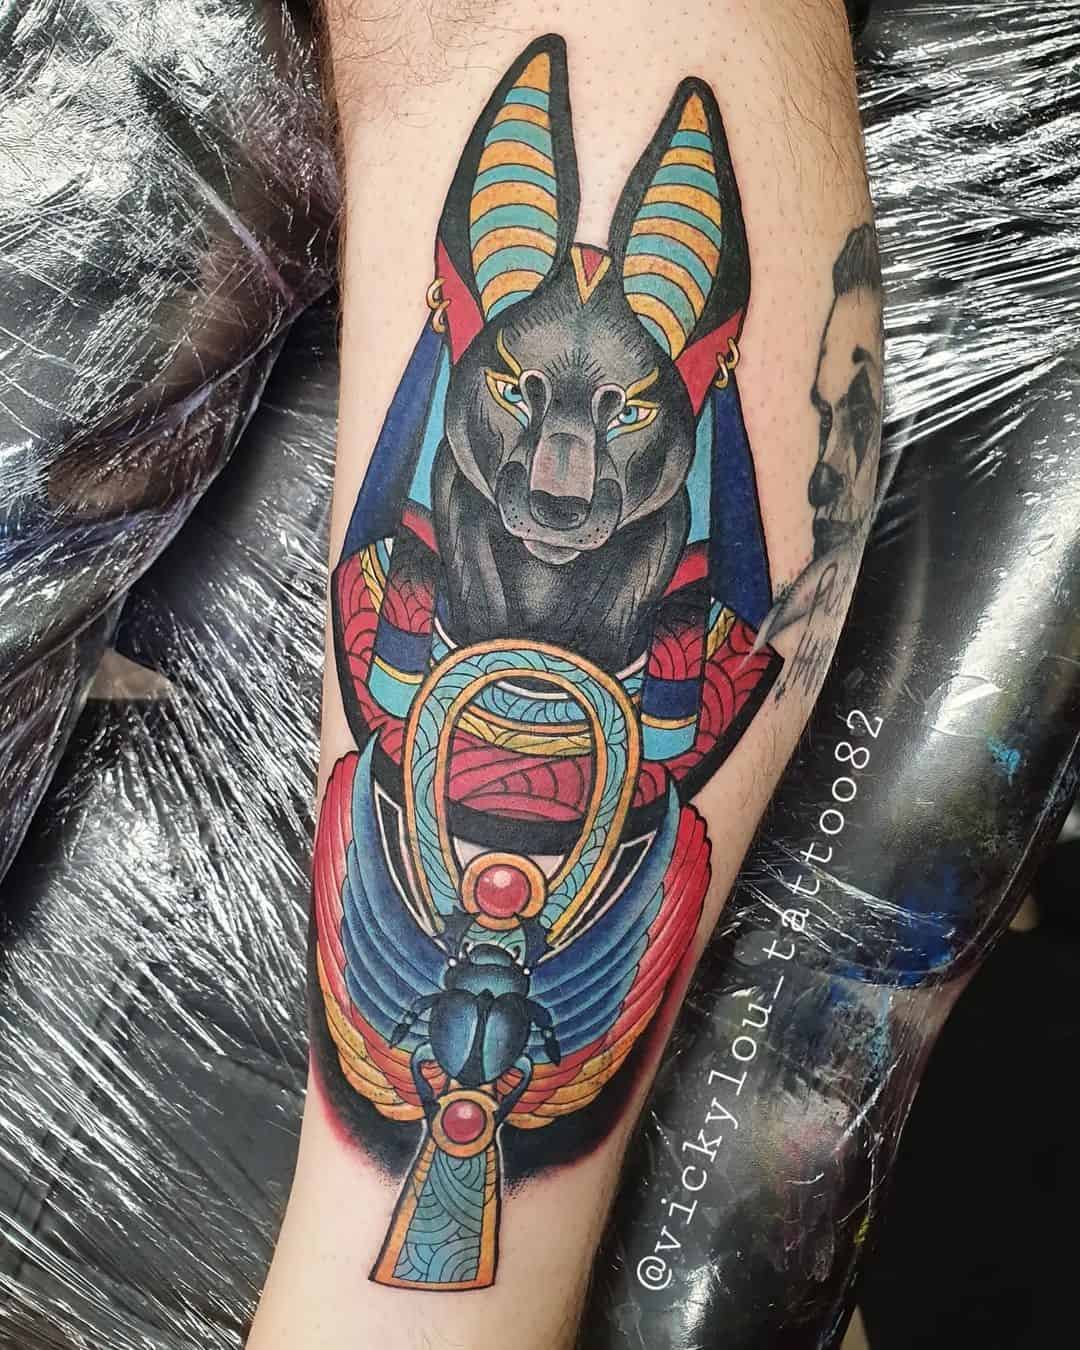 Tatuaje colorido y único de Anubis